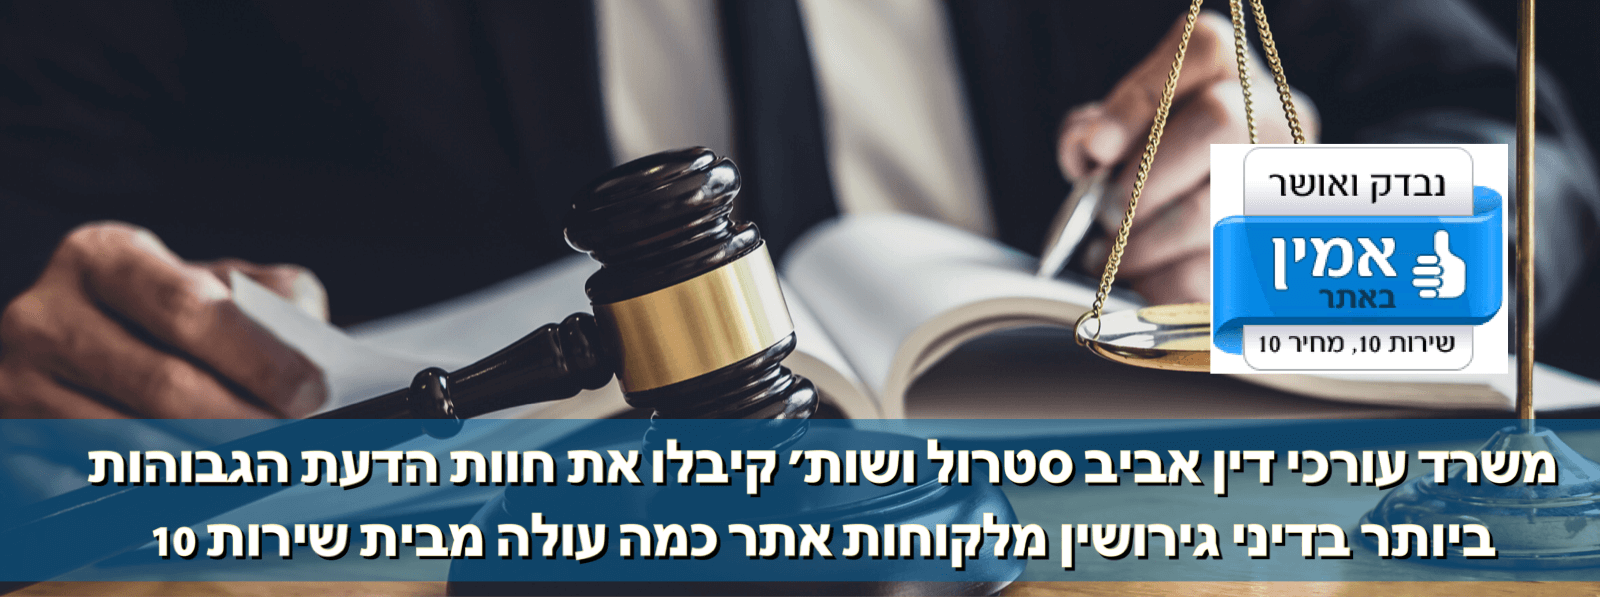 עורך דין גירושין חוות דעת 10